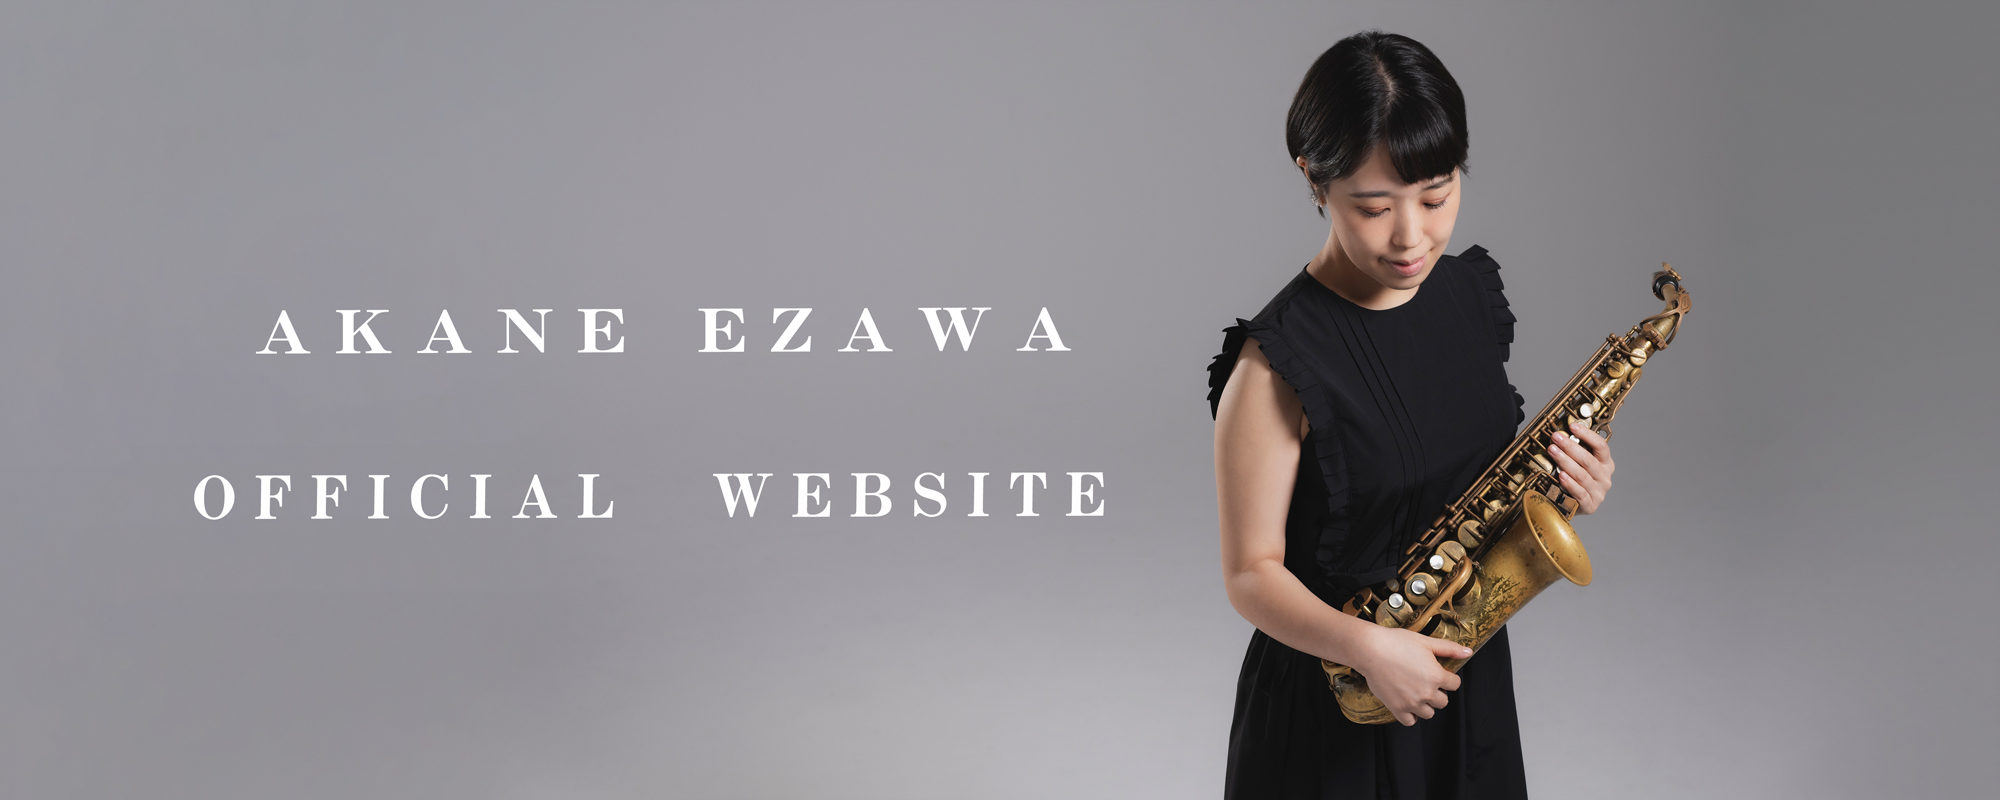 Akane Ezawa - Official Website